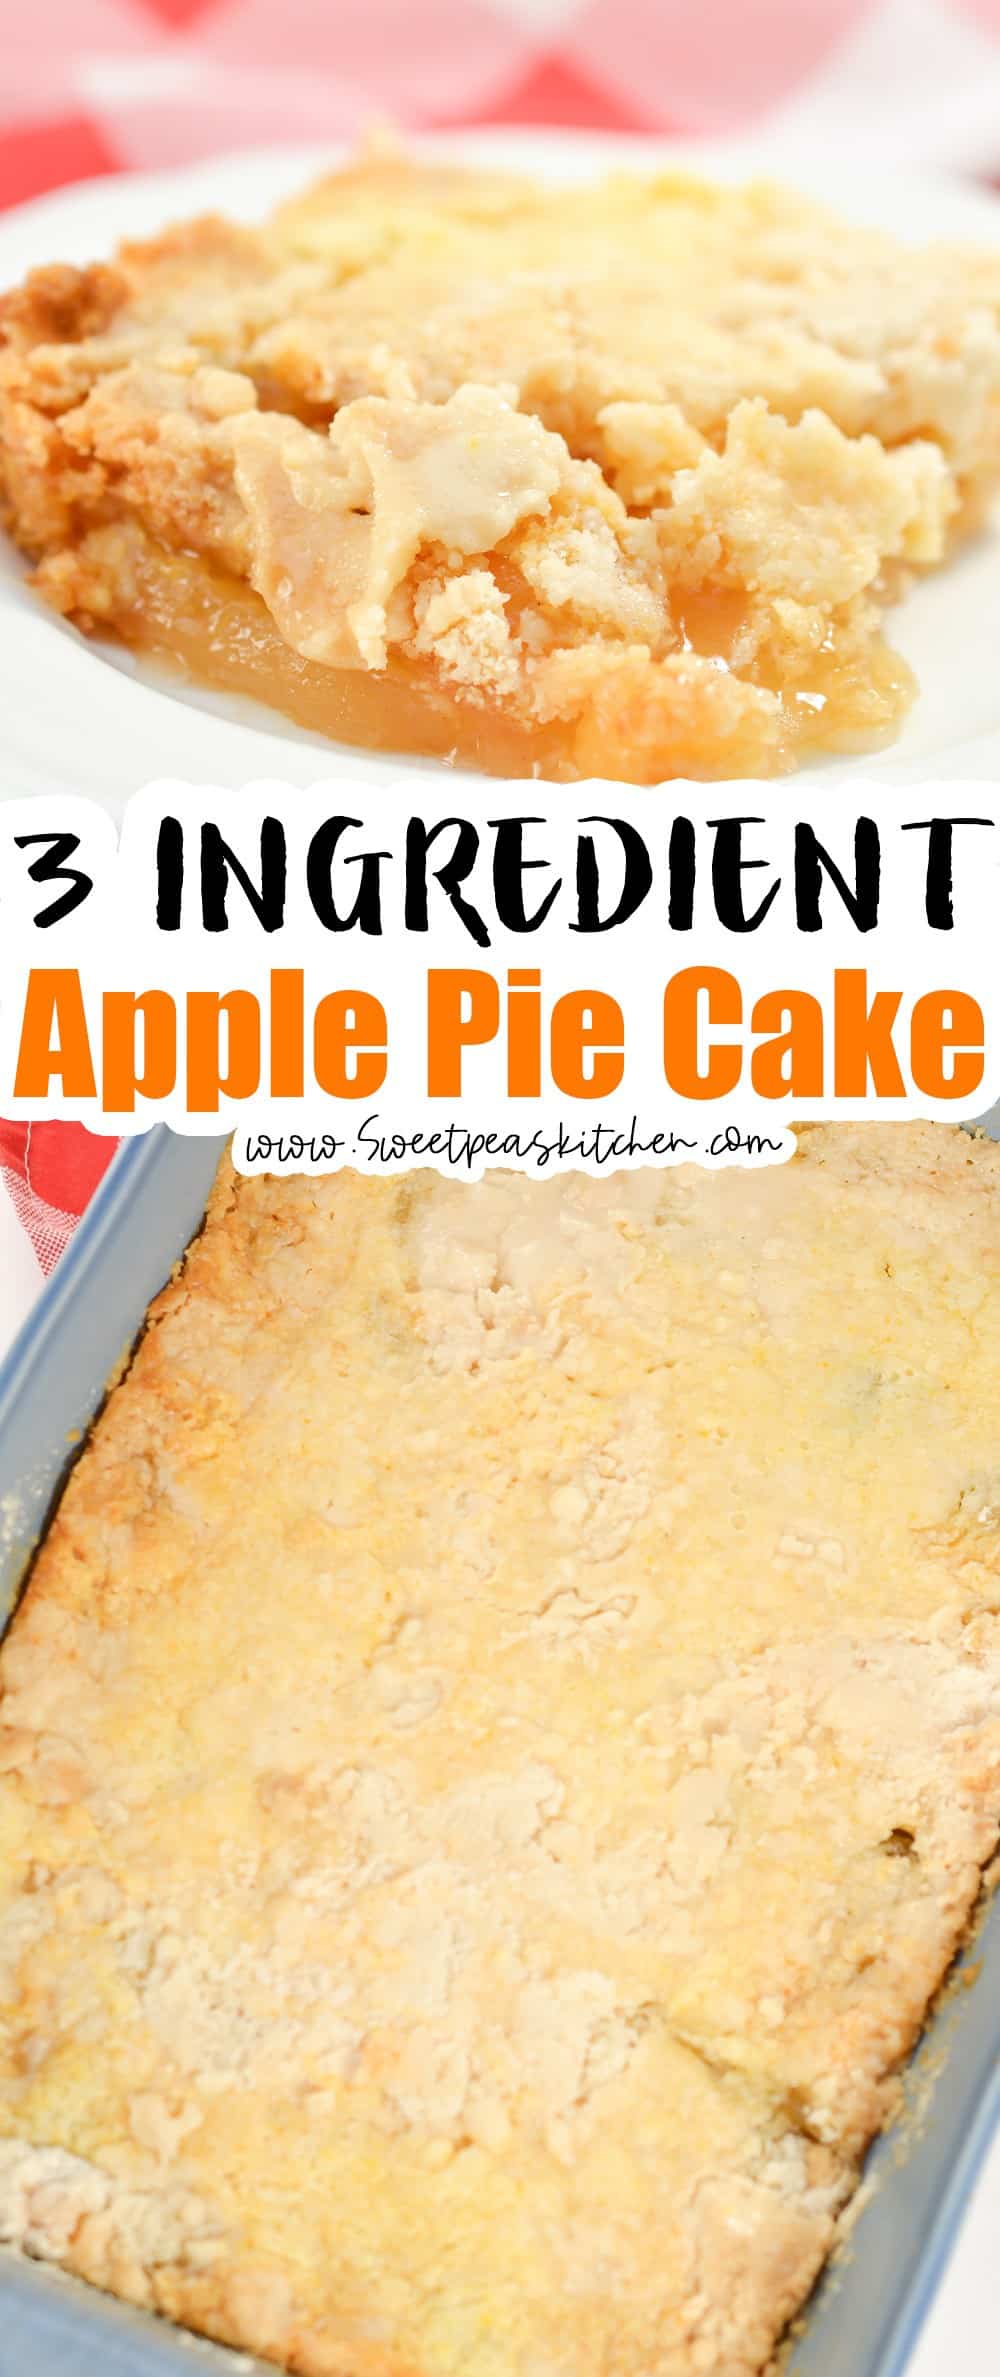 3 Ingredient Apple Pie Cake